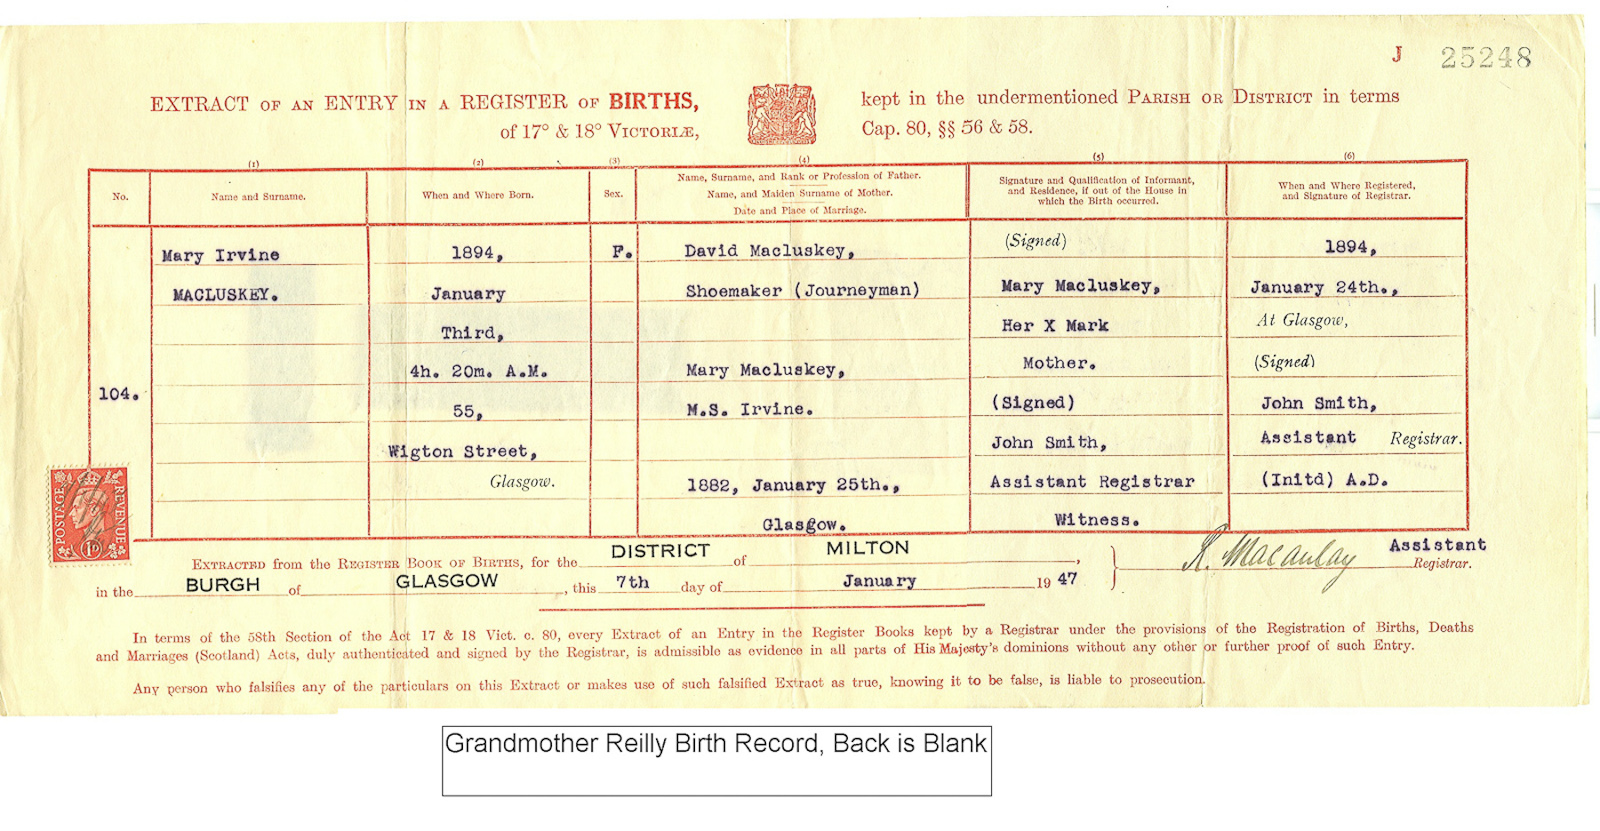 Birth Certificate - Mary Irvine Macluskey (Reilly)